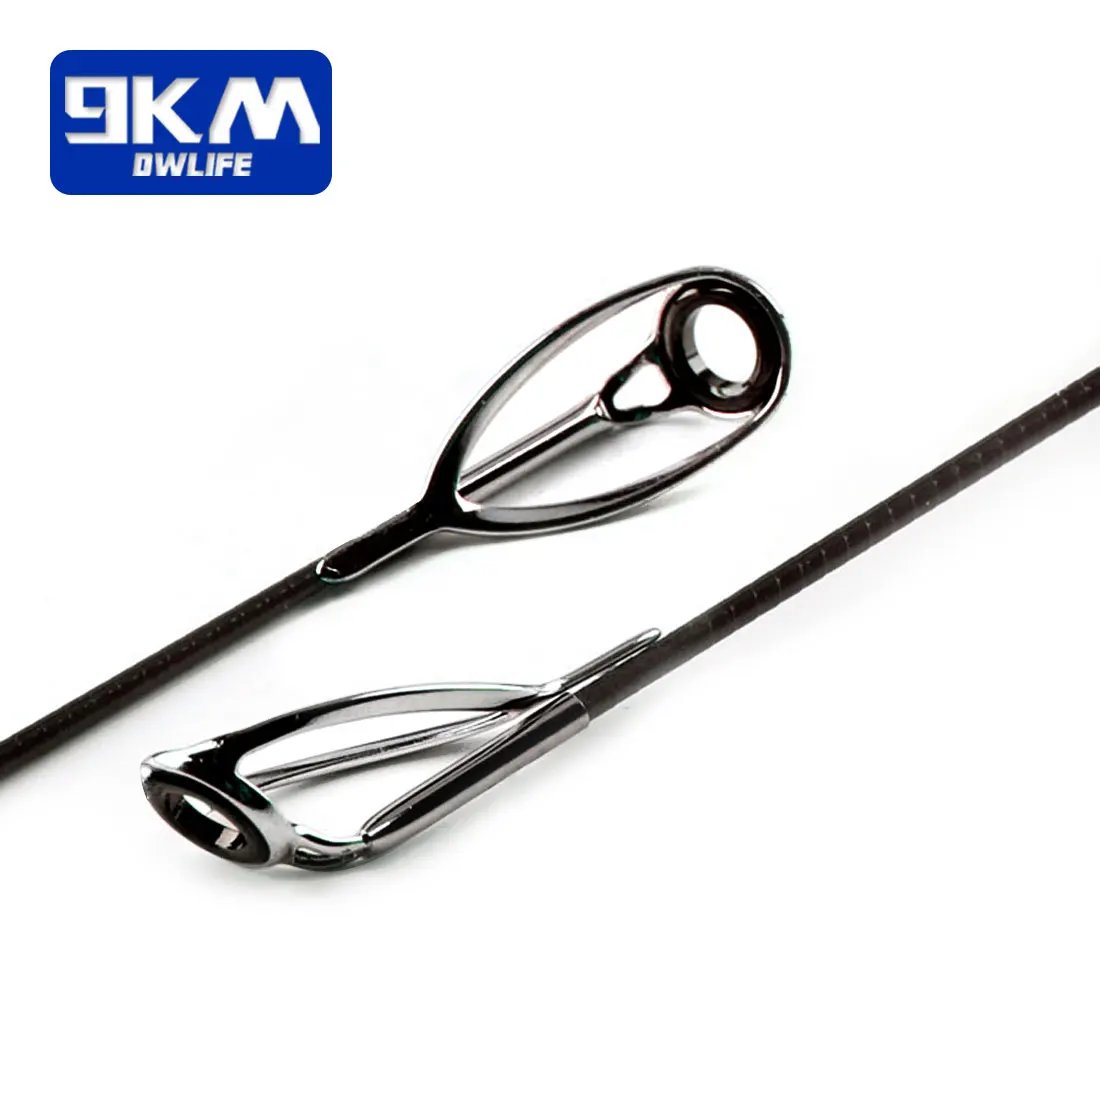 6mm Tube Dia Fishing Rod Tips Repair Kit, 3pcs Stainless Steel Ring Guide